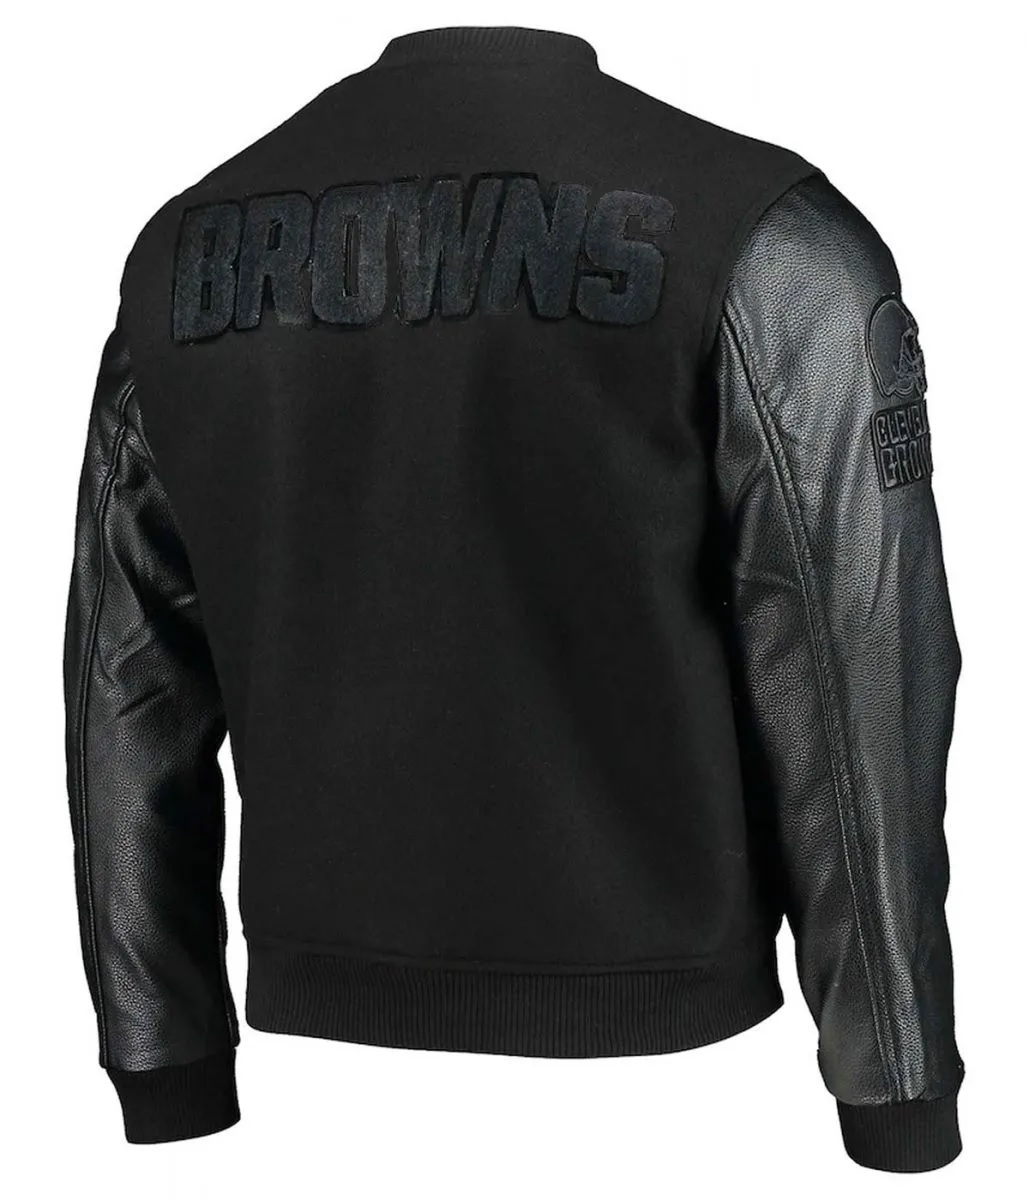 Varsity Cleveland Browns Black Jacket